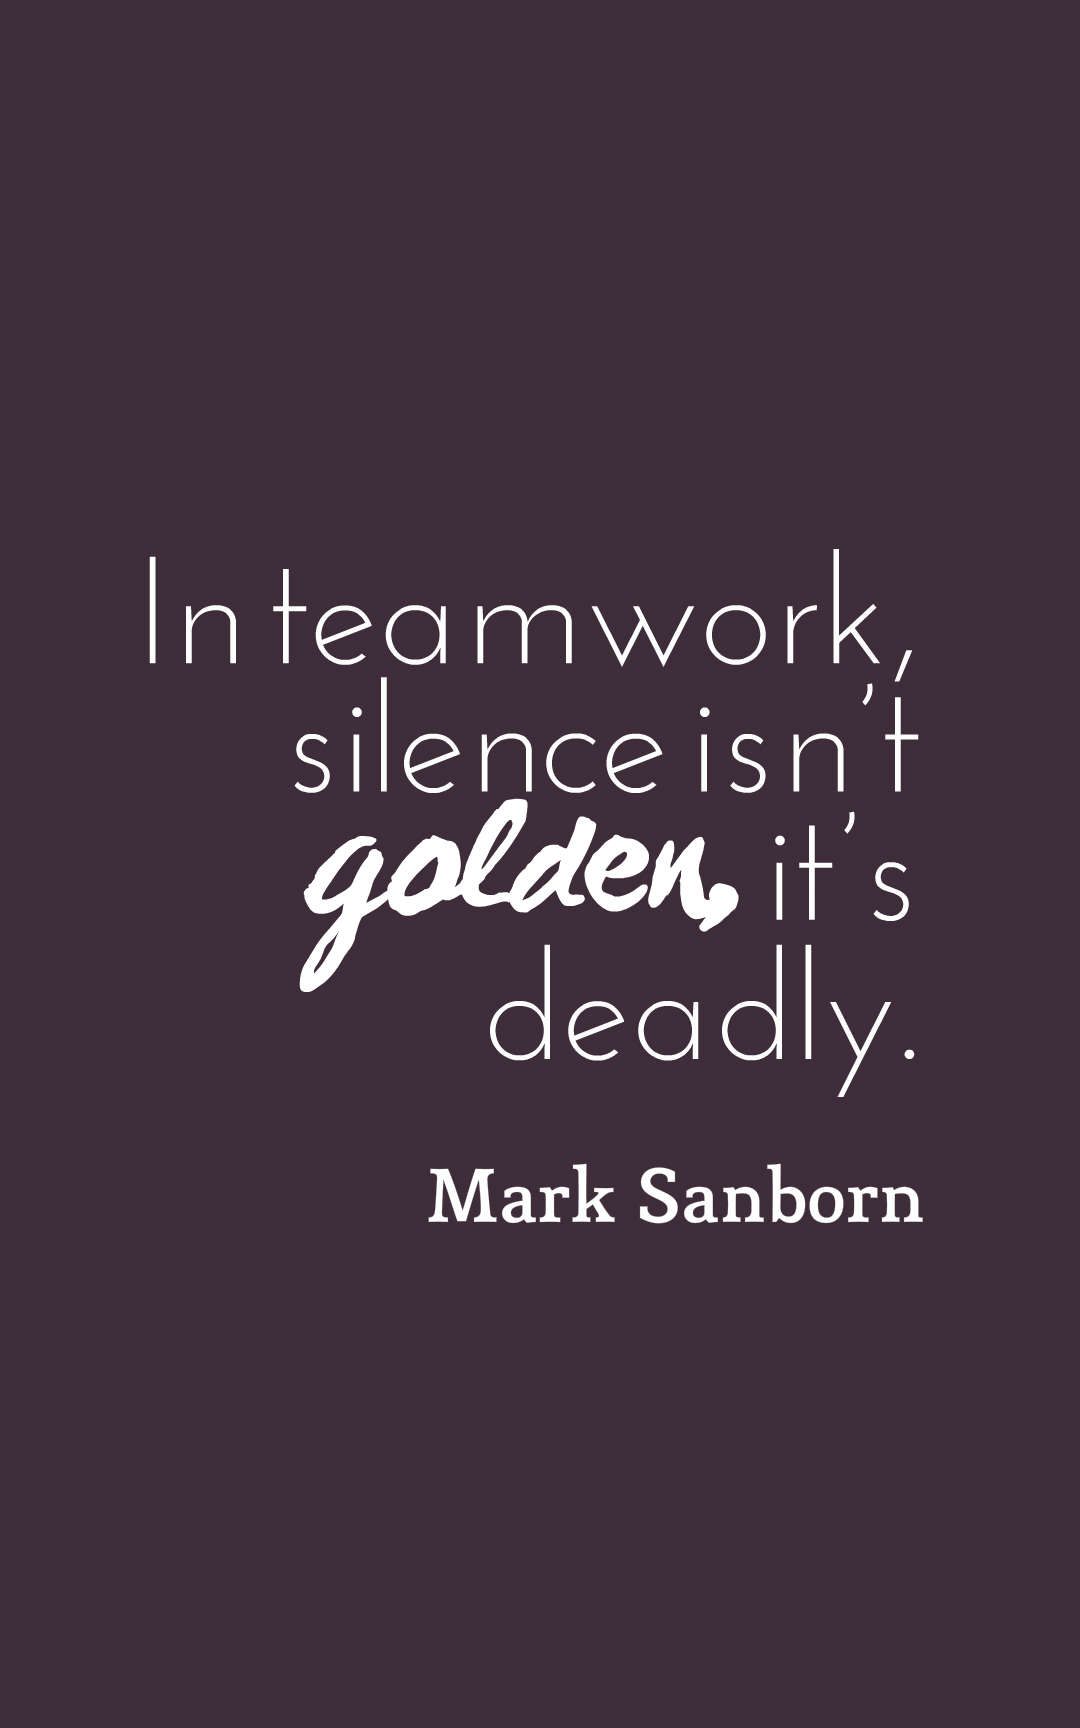 In teamwork, silence isn’t golden, it’s deadly.